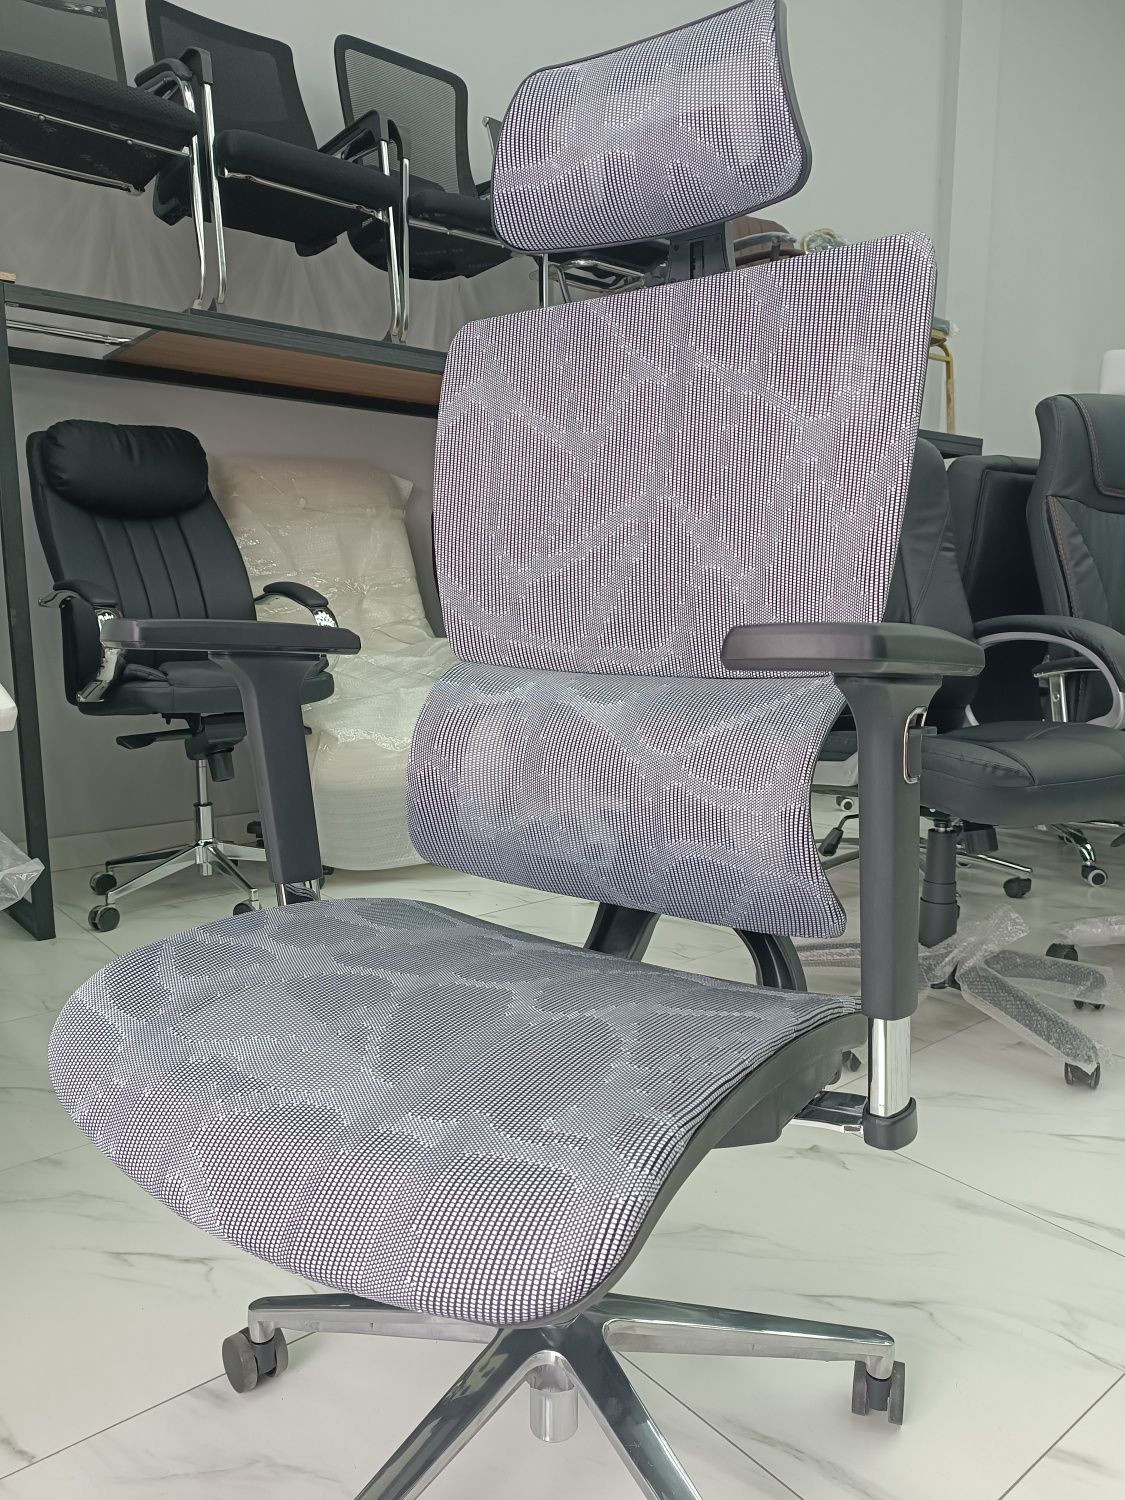 Кресло для офиса , yangi uslubdagi Kreslolar

кресла для руководите